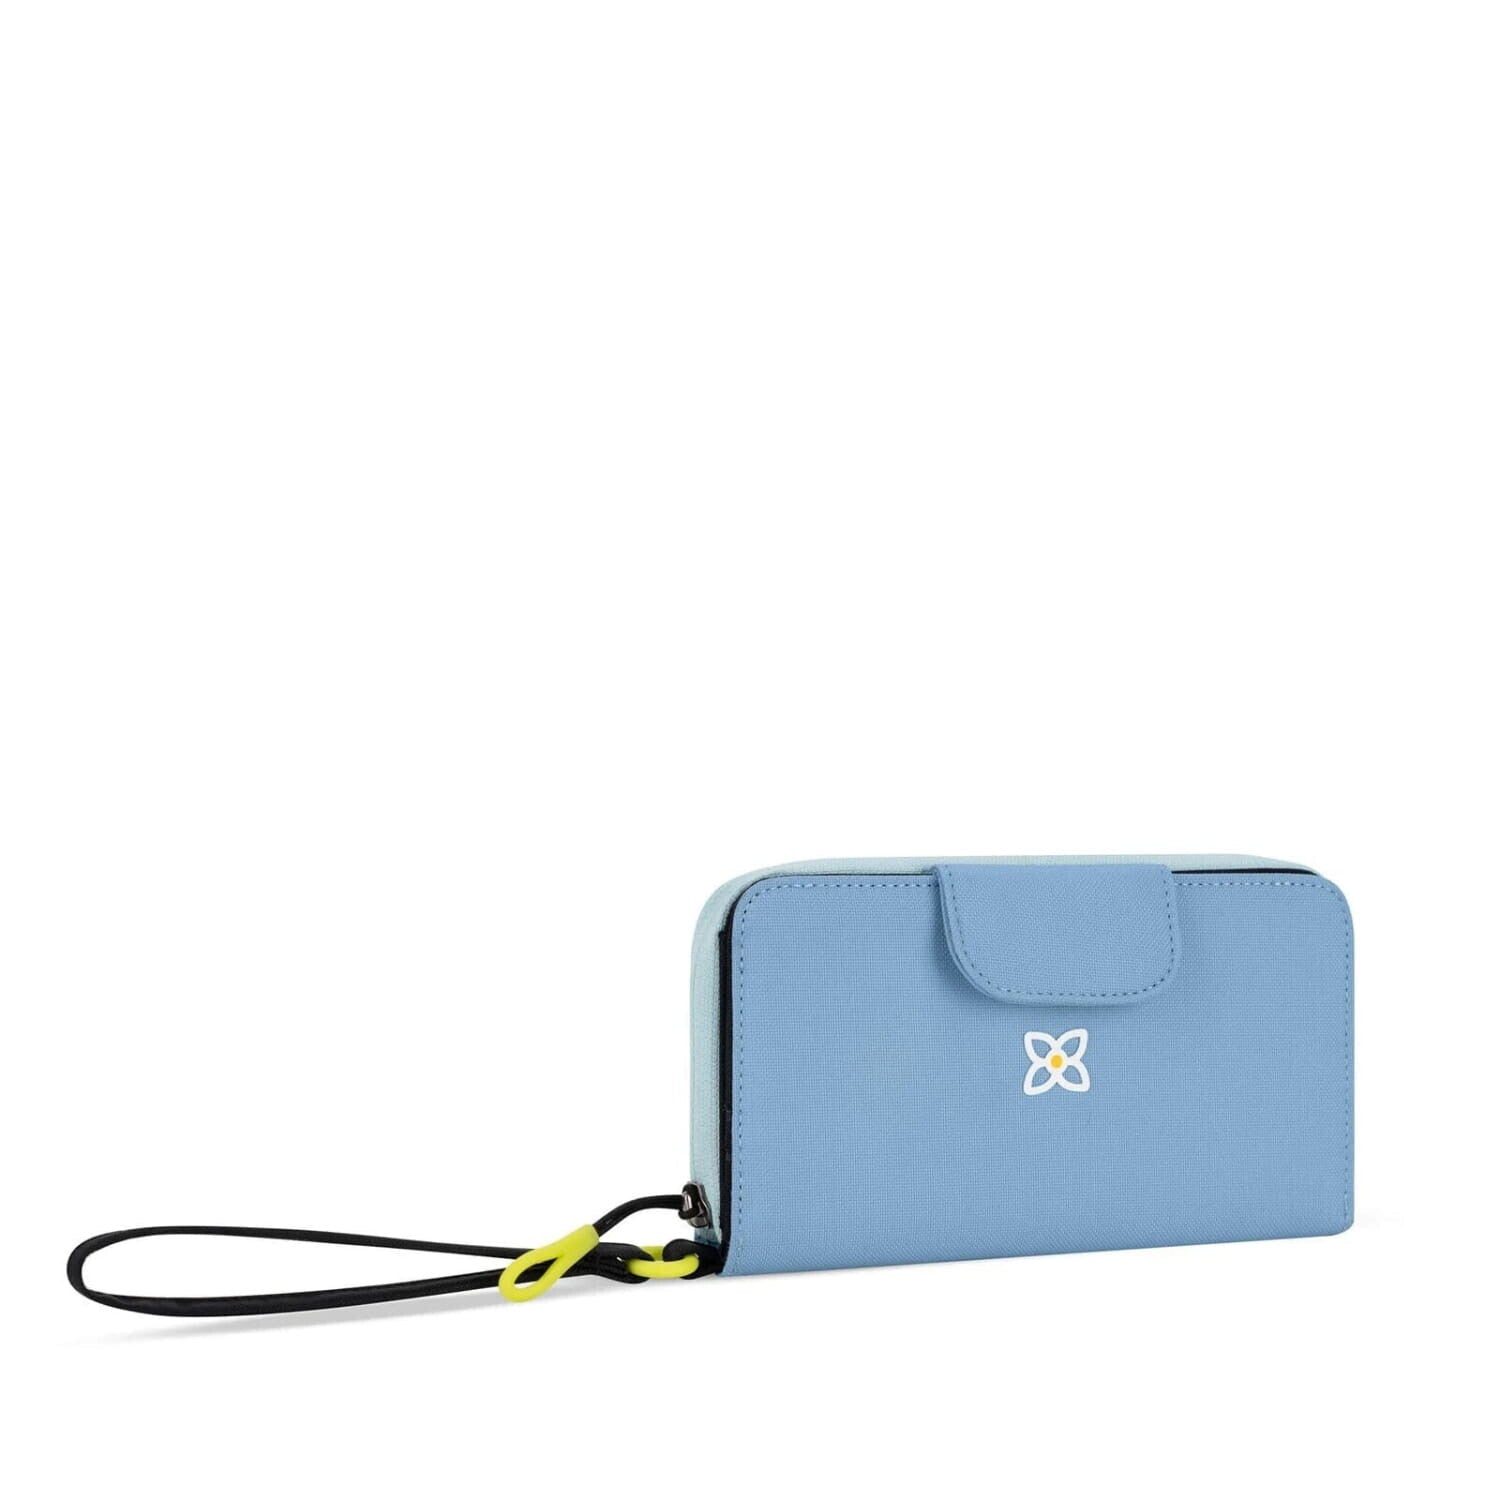 Sherpani Tulum | RFID Wristlet Wallet, Maui Blue, front view 